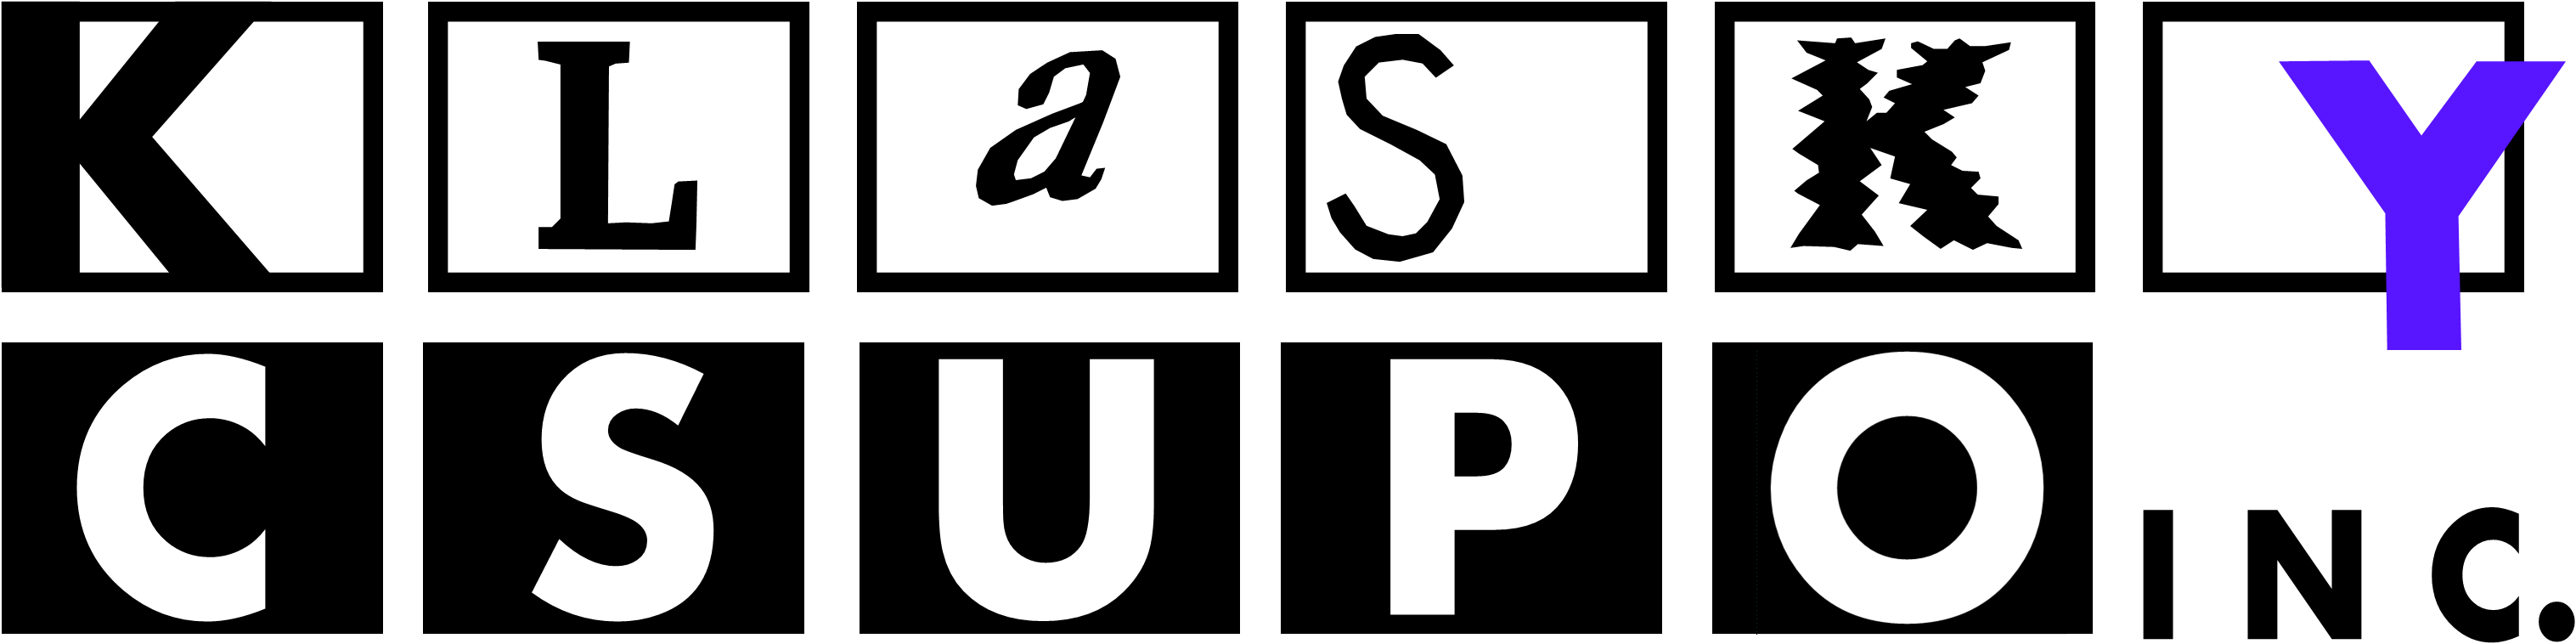 Klasky Csupo Logo History